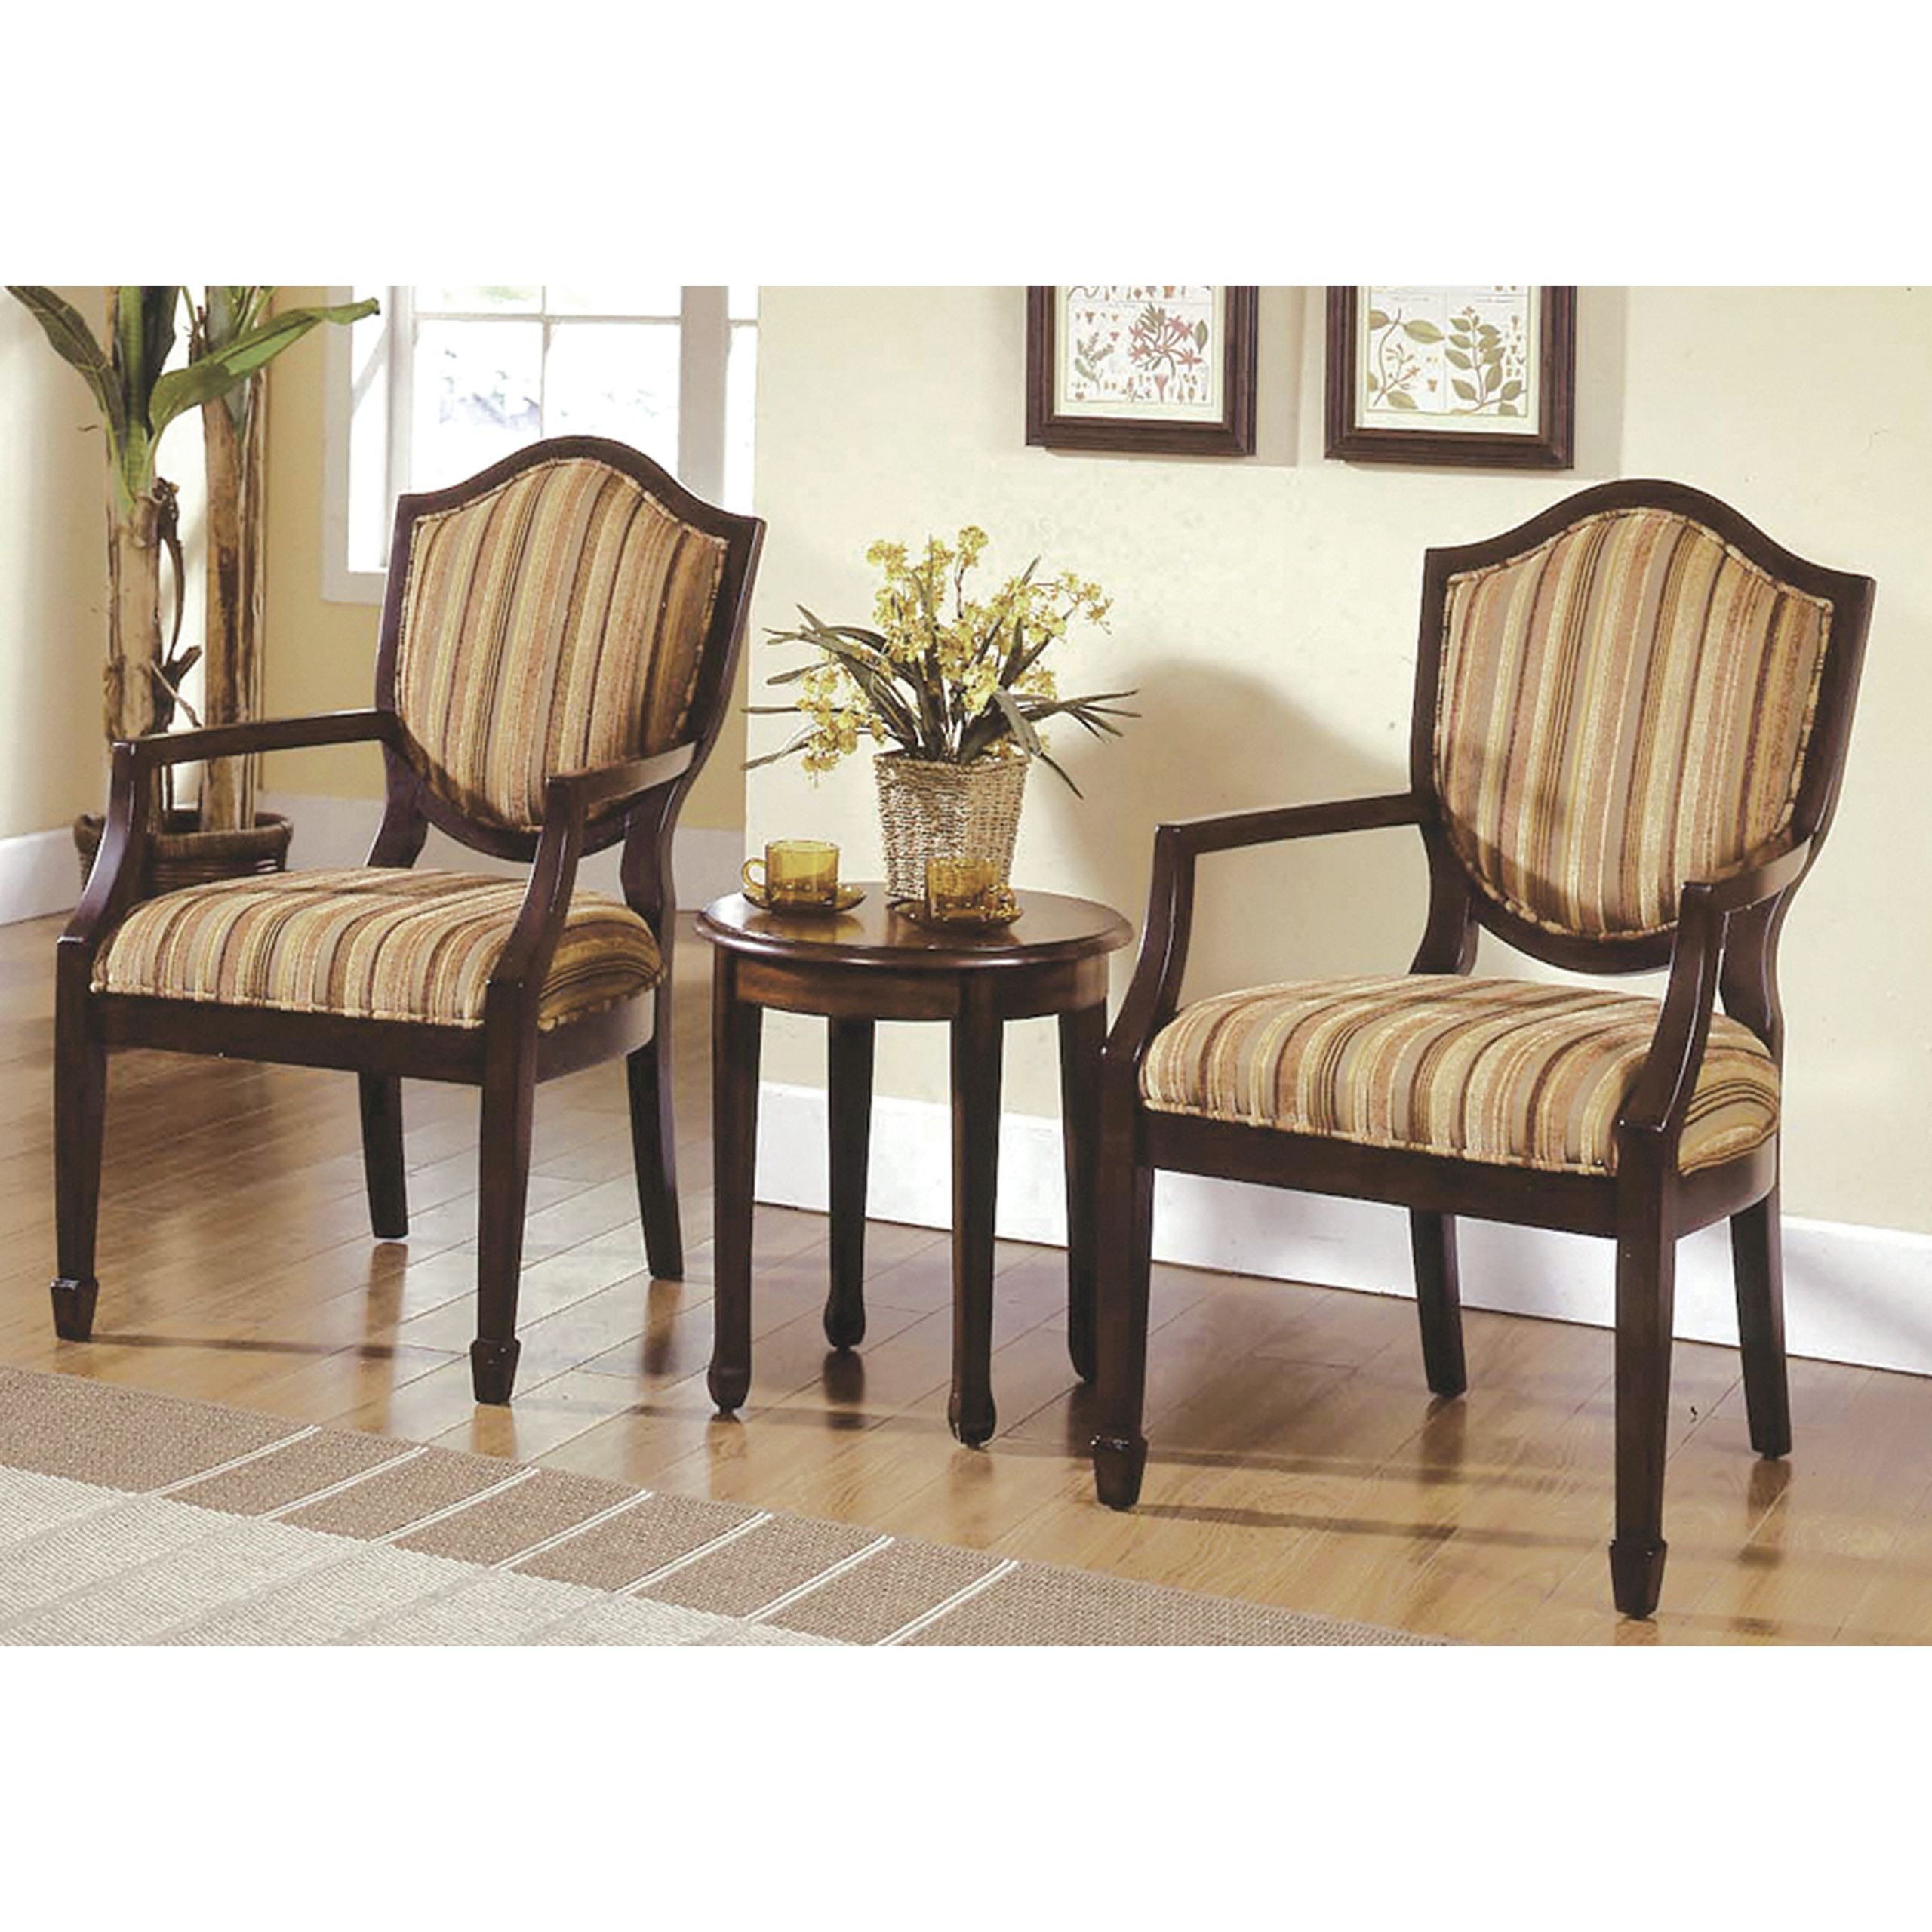 Walmart Living Room Tables
 Best Master Furniture s Brandi 3 Piece Traditional Living